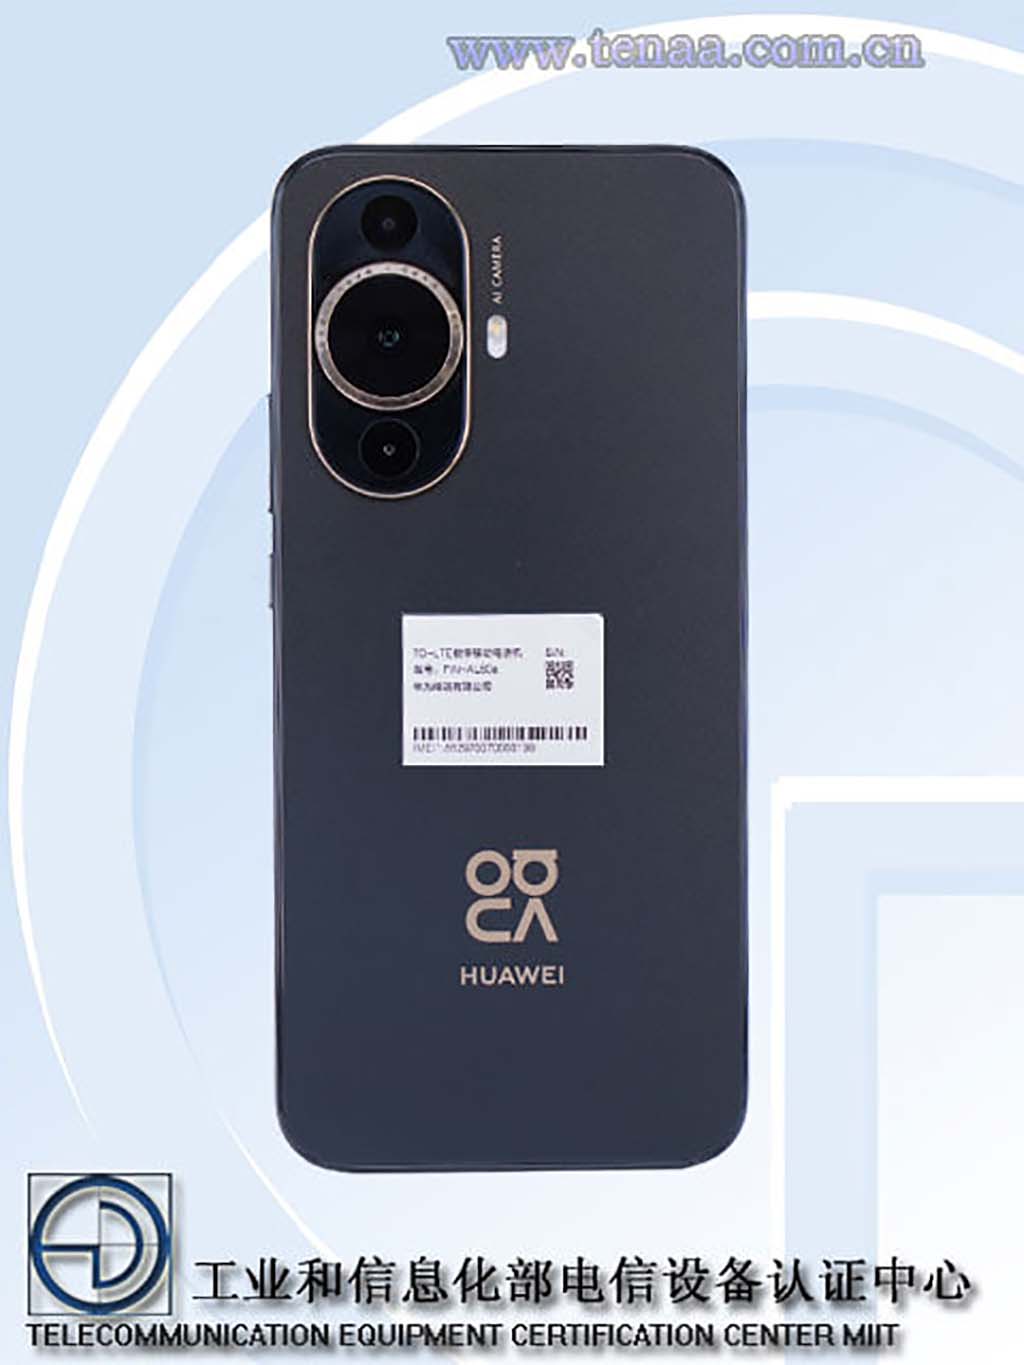 Huawei FIN-AL60A phone TENAA design